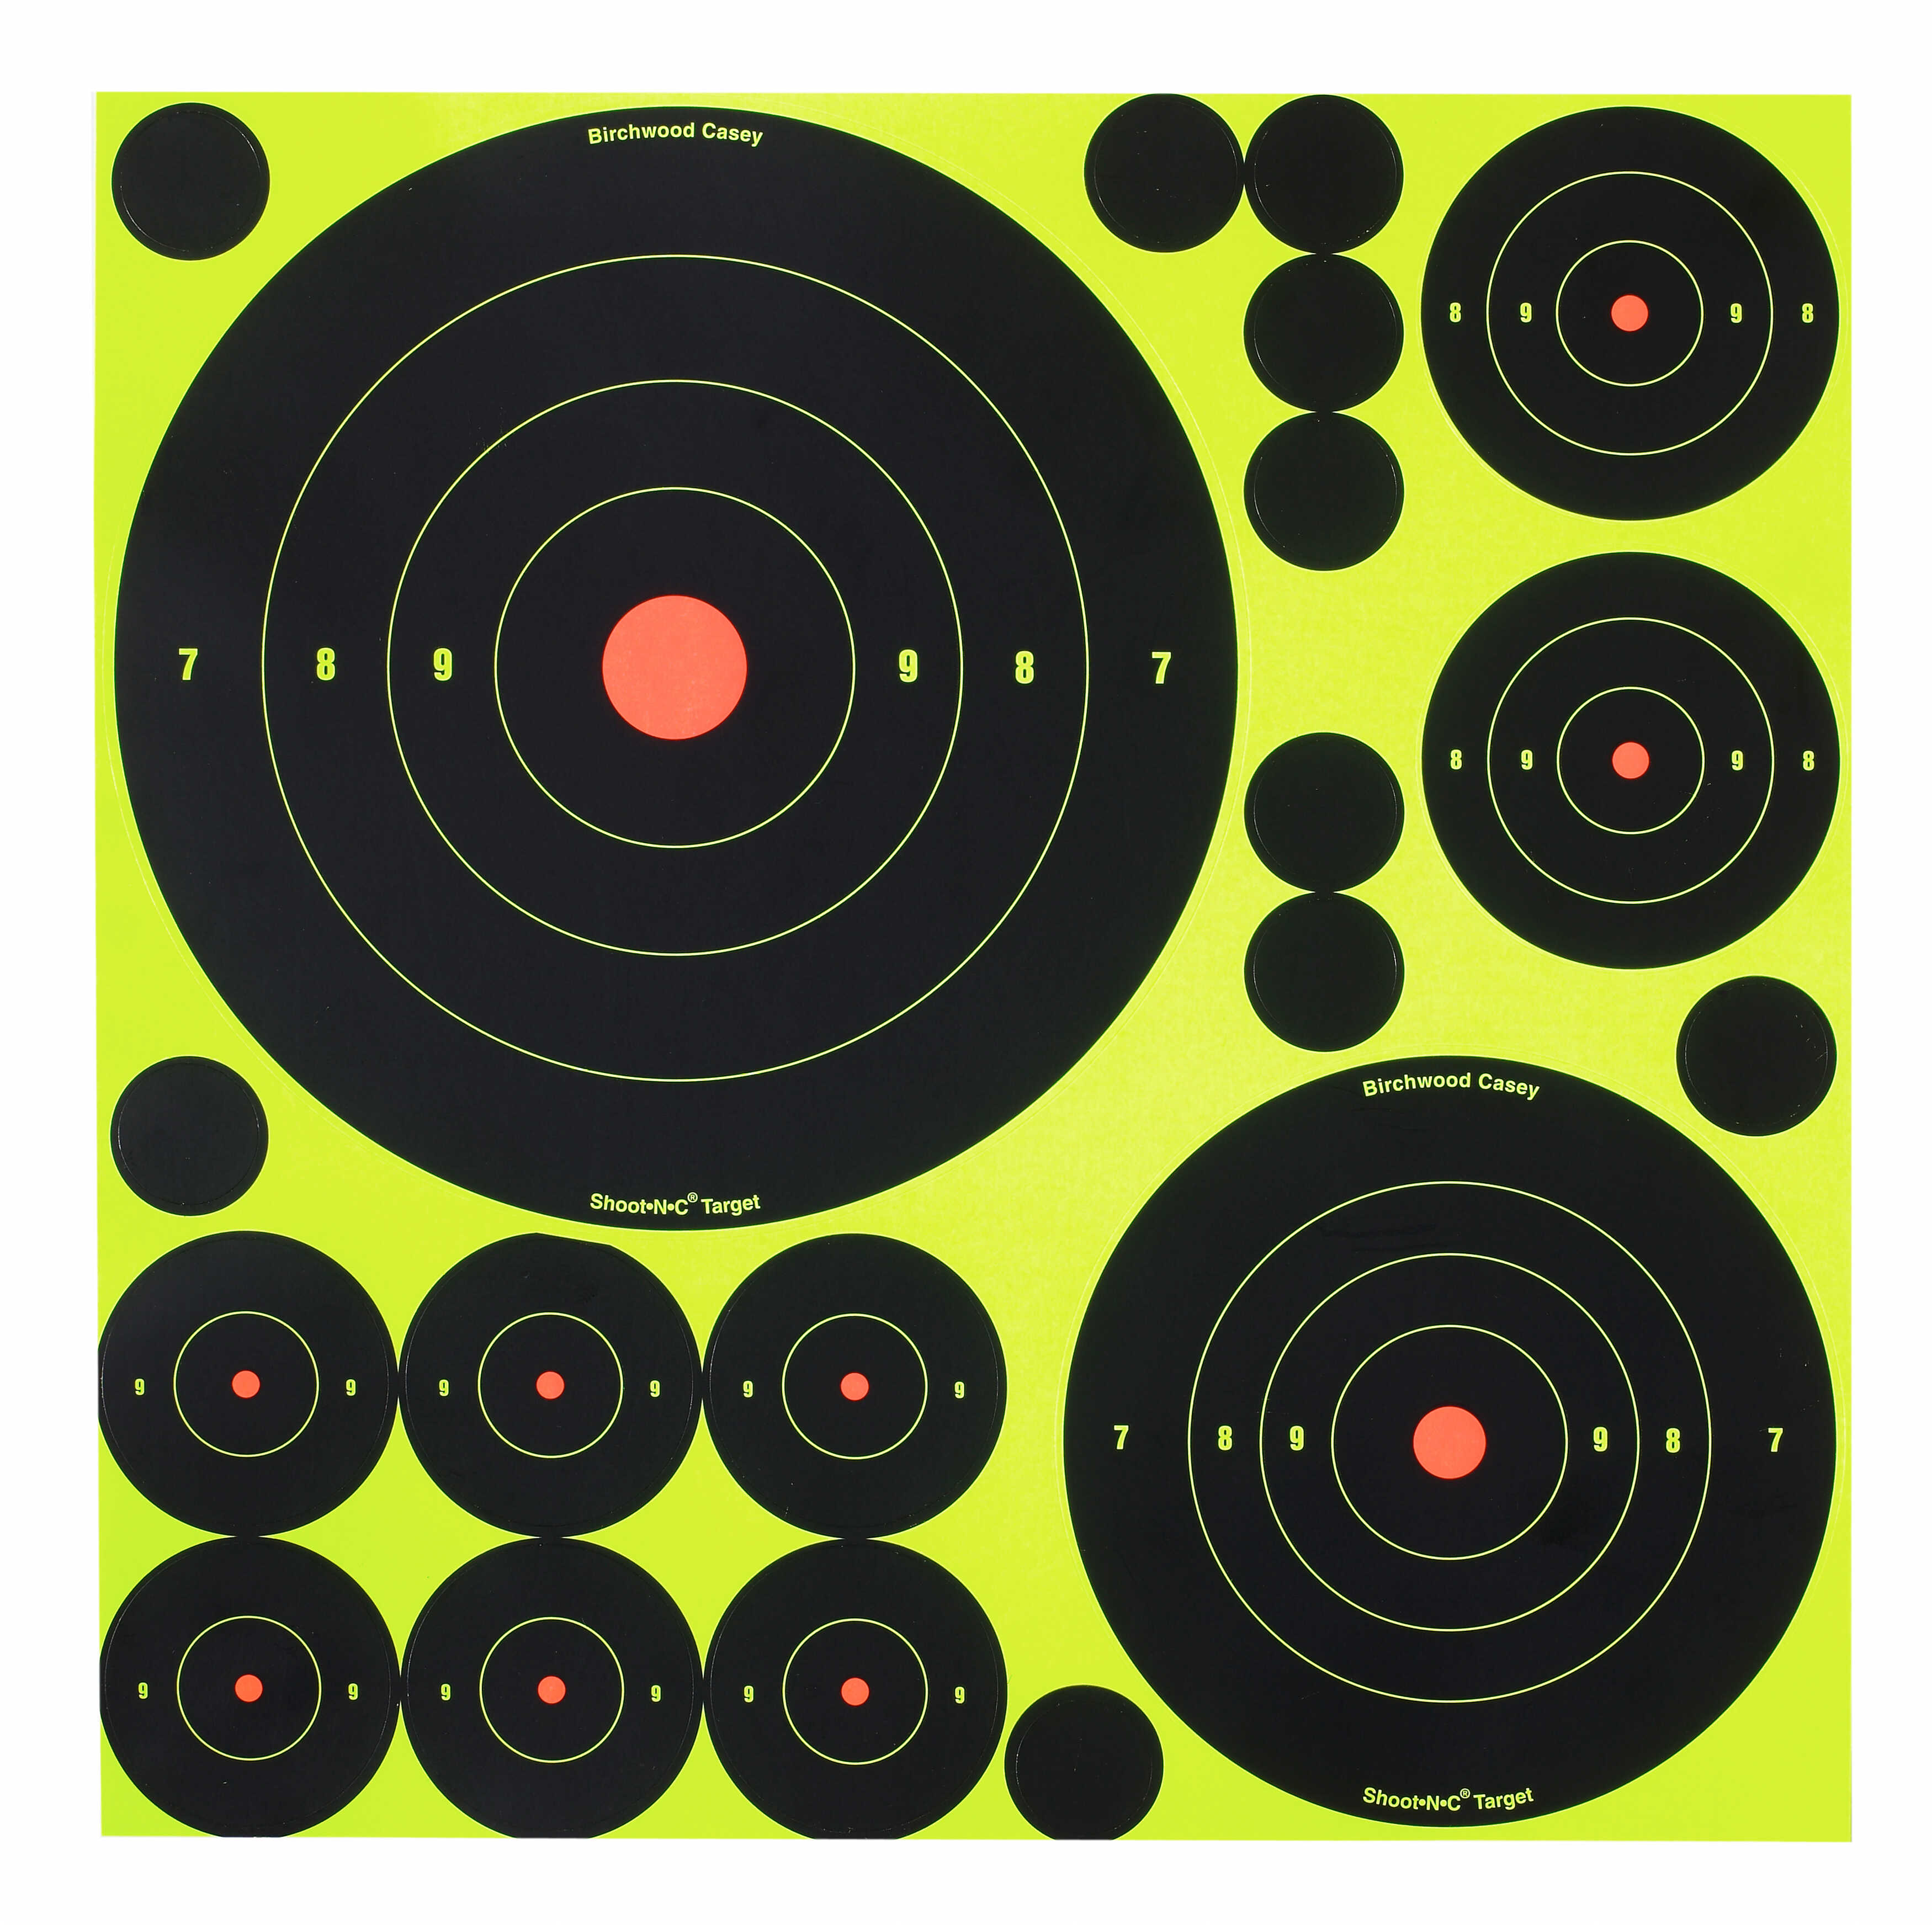 Birchwood Casey Shoot-N-C Adhesive Targets Variety/Pack